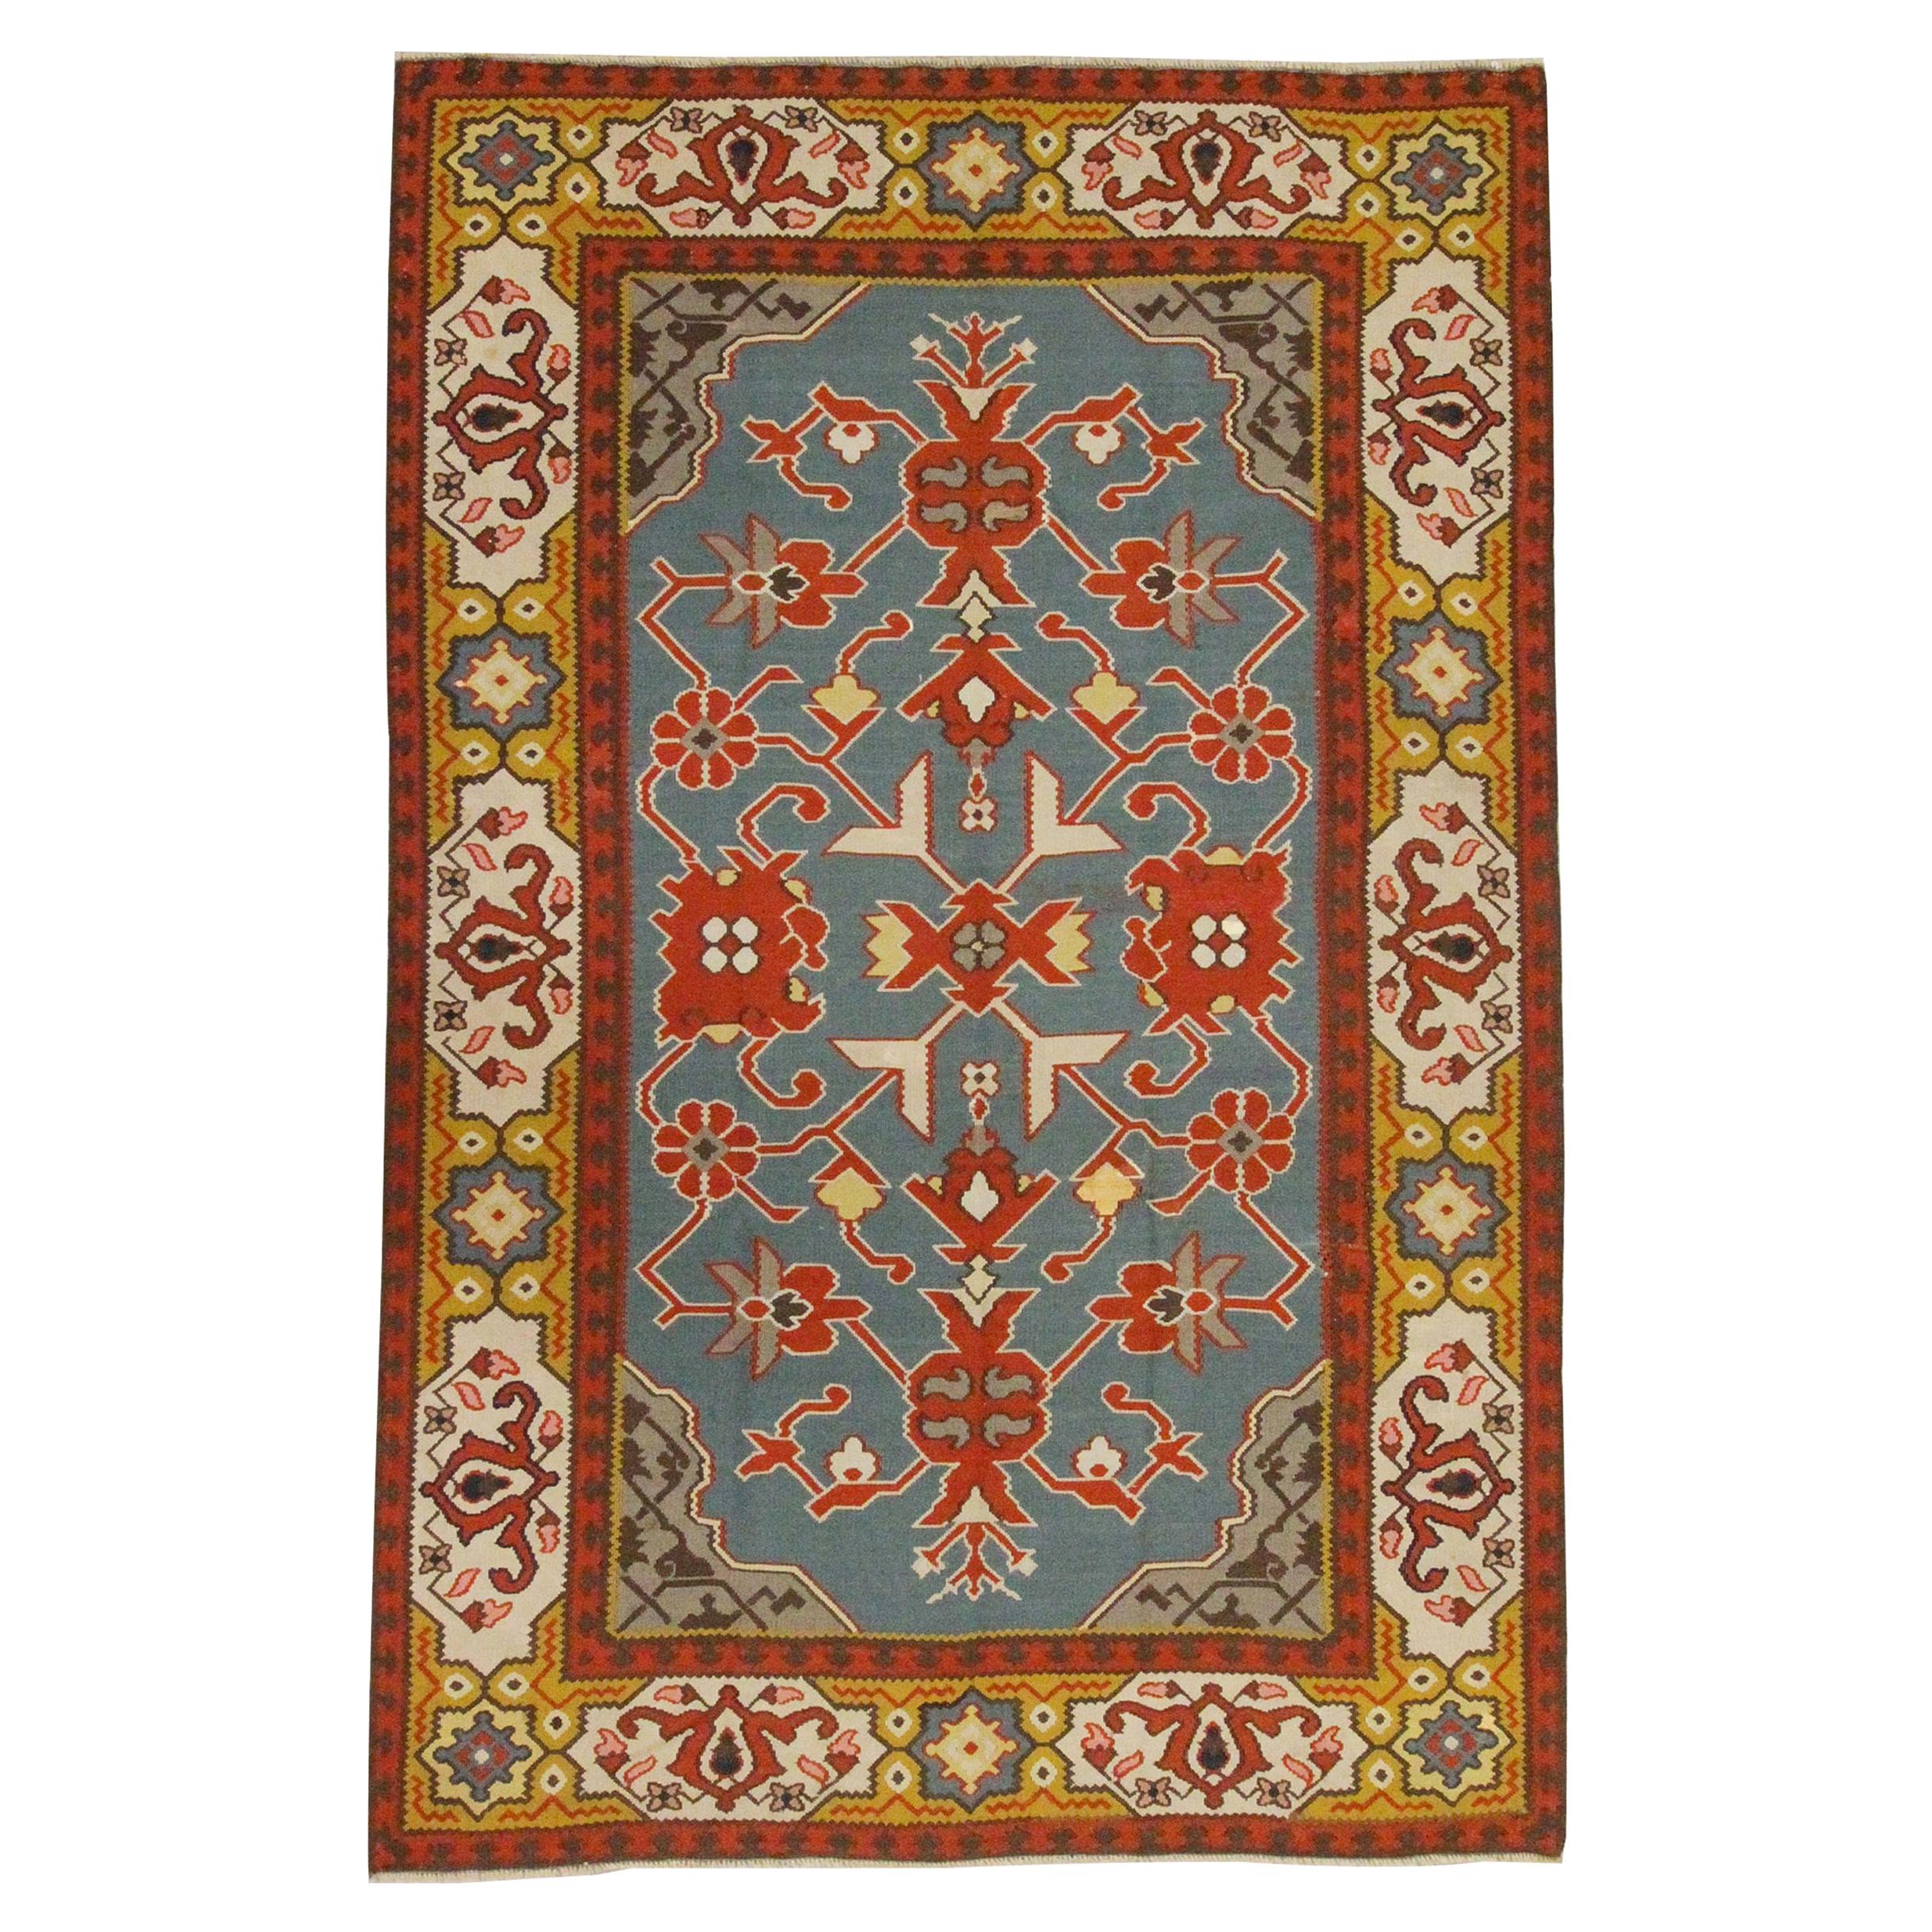 https://a.1stdibscdn.com/antique-wool-kilim-rug-handmade-tribal-anatolian-pirot-turkish-carpet-for-sale/1121189/f_244367021625755329440/24436702_master.jpg